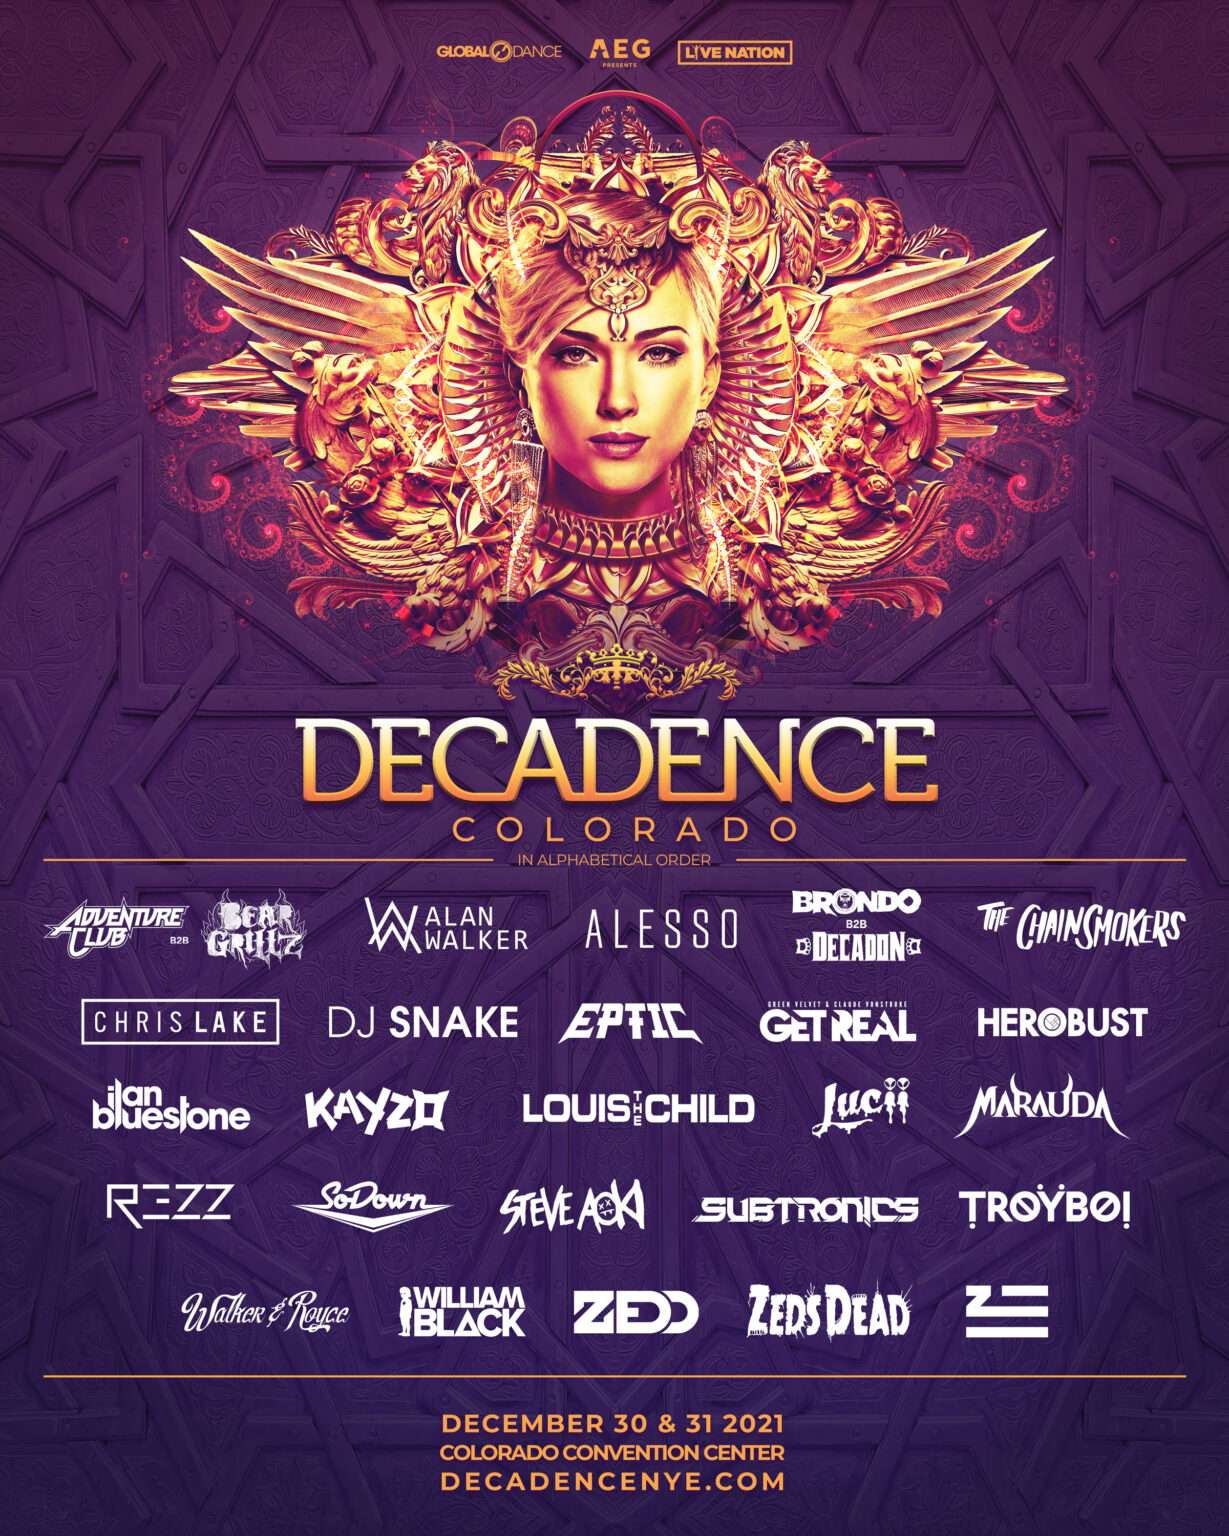 Decadence NYE Drops Lineup With Rezz, Zedd, DJ Snake, & More Your EDM